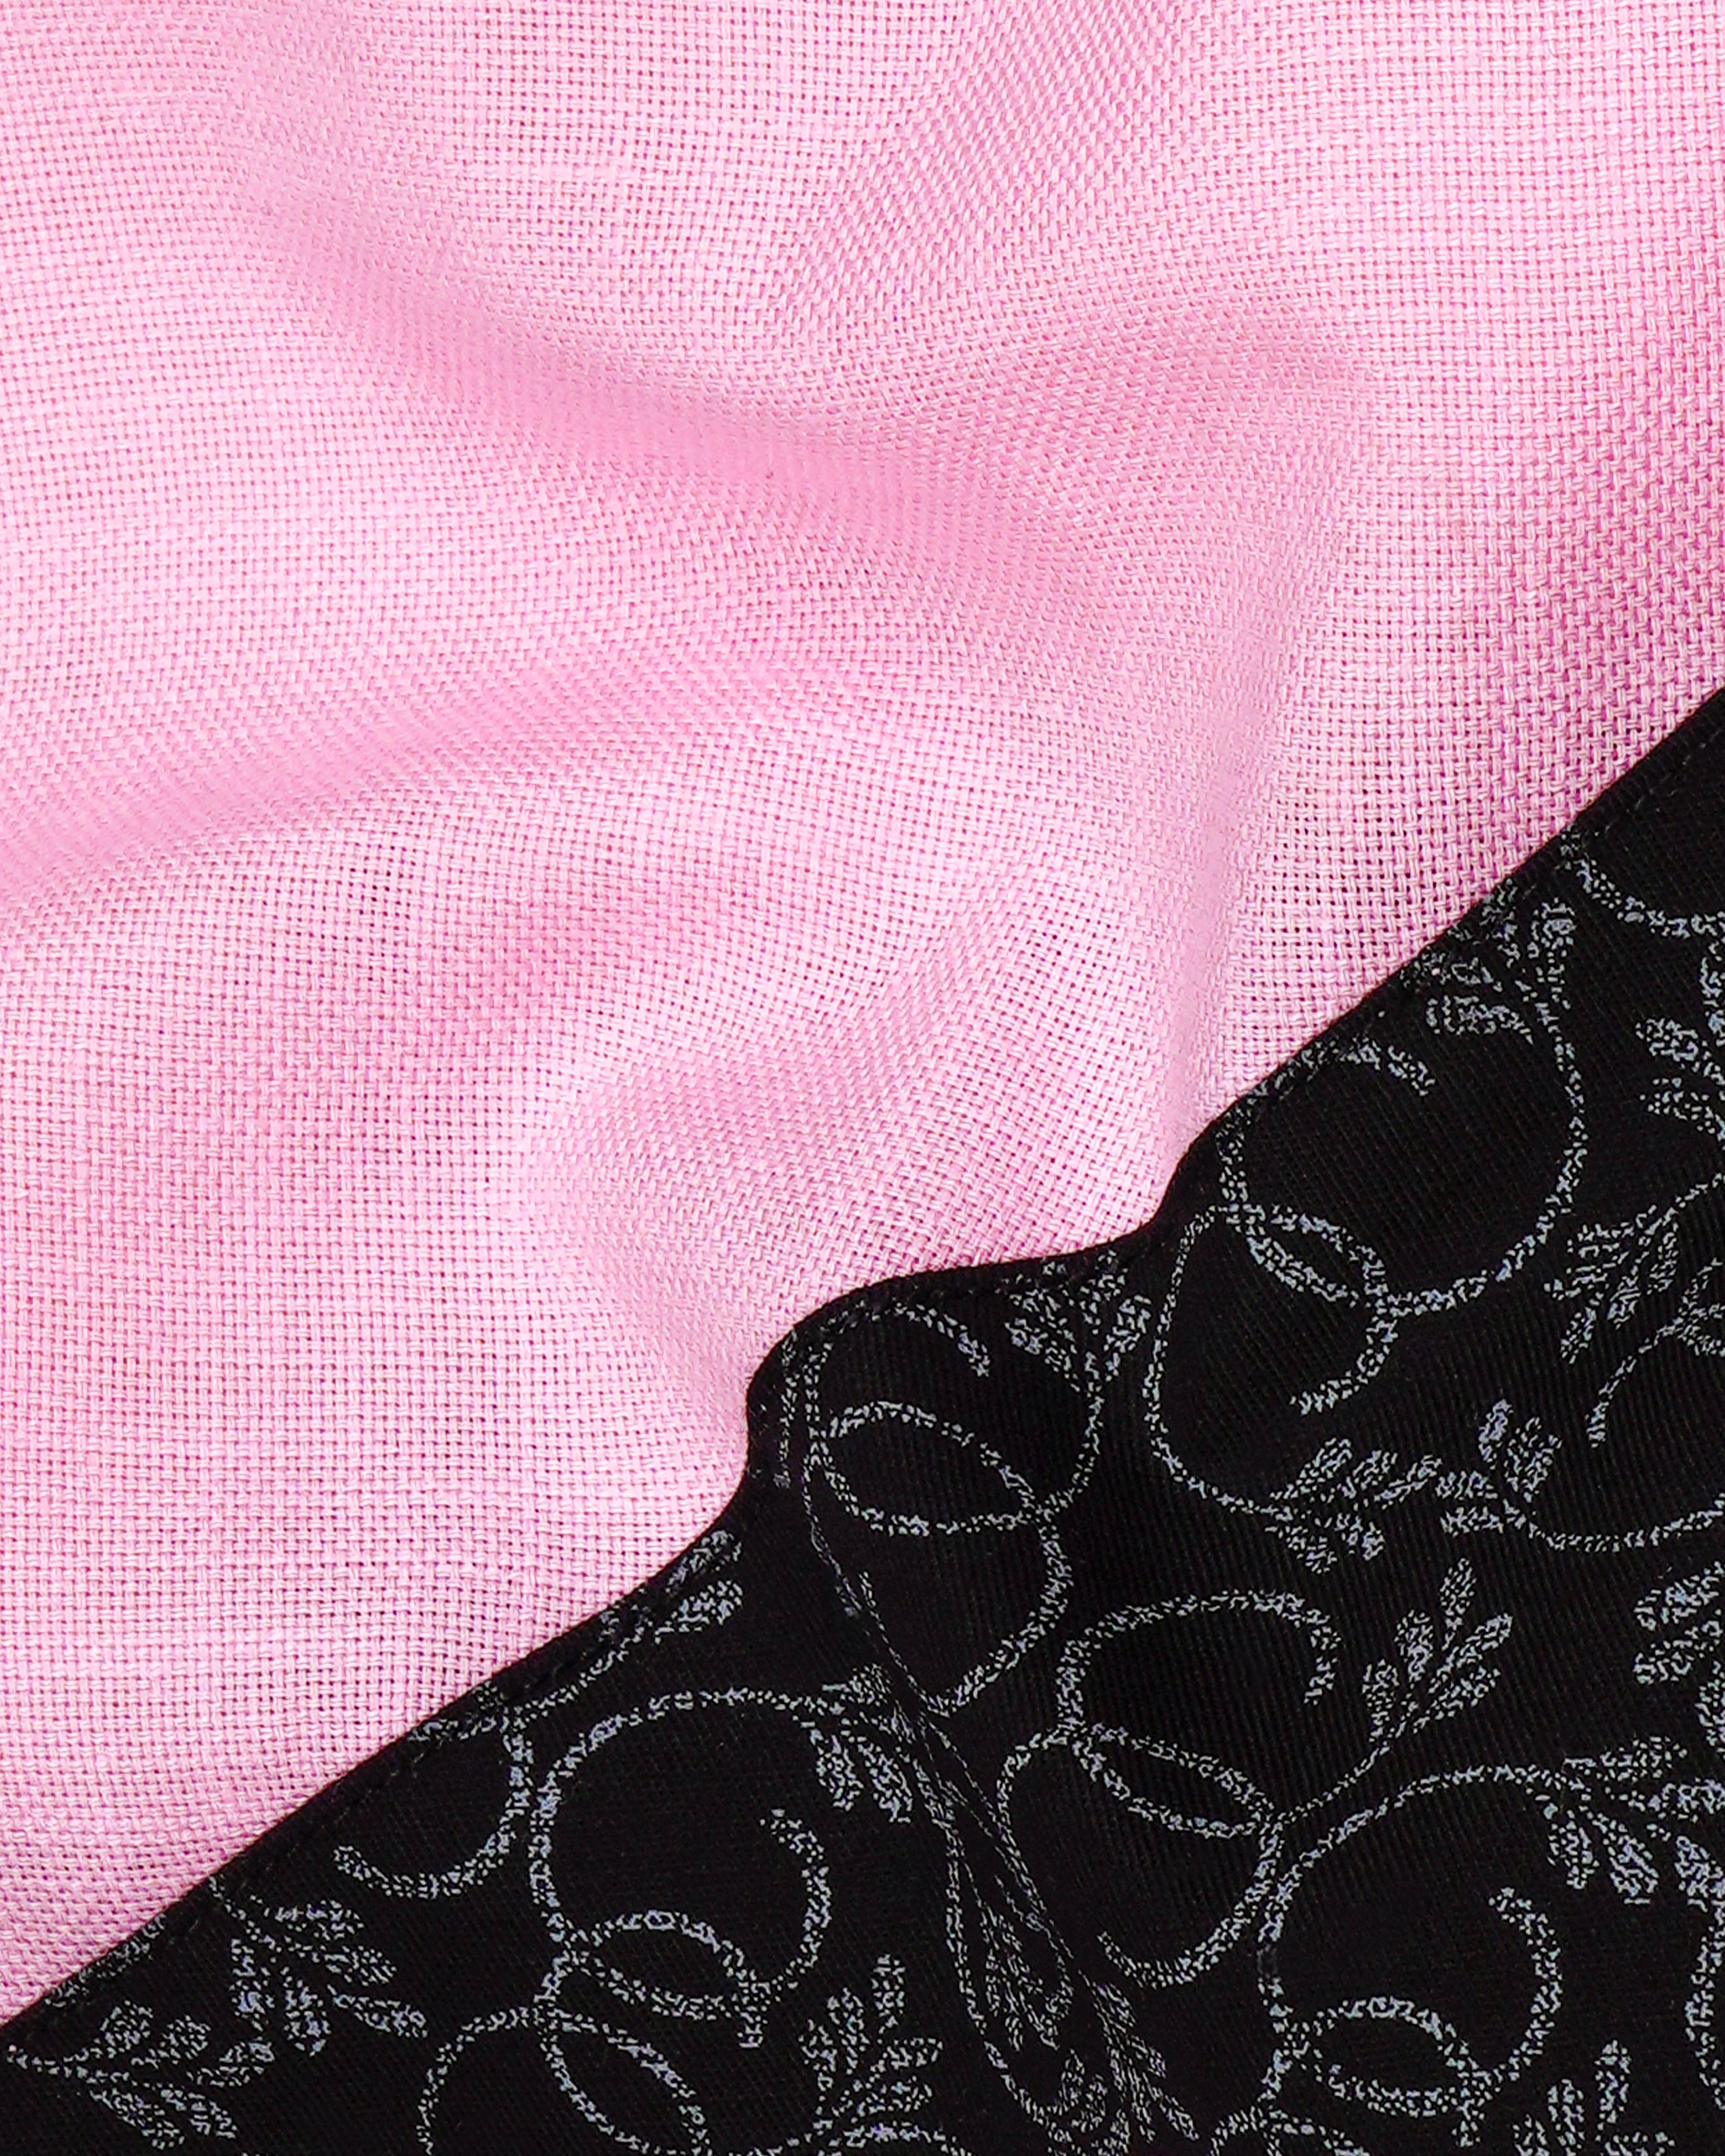 Chantilly Pink with Jade Black Ditsy Dobby Textured Premium Giza Cotton Designer Shirt 8113-P216-38, 8113-P216-H-38, 8113-P216-39, 8113-P216-H-39, 8113-P216-40, 8113-P216-H-40, 8113-P216-42, 8113-P216-H-42, 8113-P216-44, 8113-P216-H-44, 8113-P216-46, 8113-P216-H-46, 8113-P216-48, 8113-P216-H-48, 8113-P216-50, 8113-P216-H-50, 8113-P216-52, 8113-P216-H-52